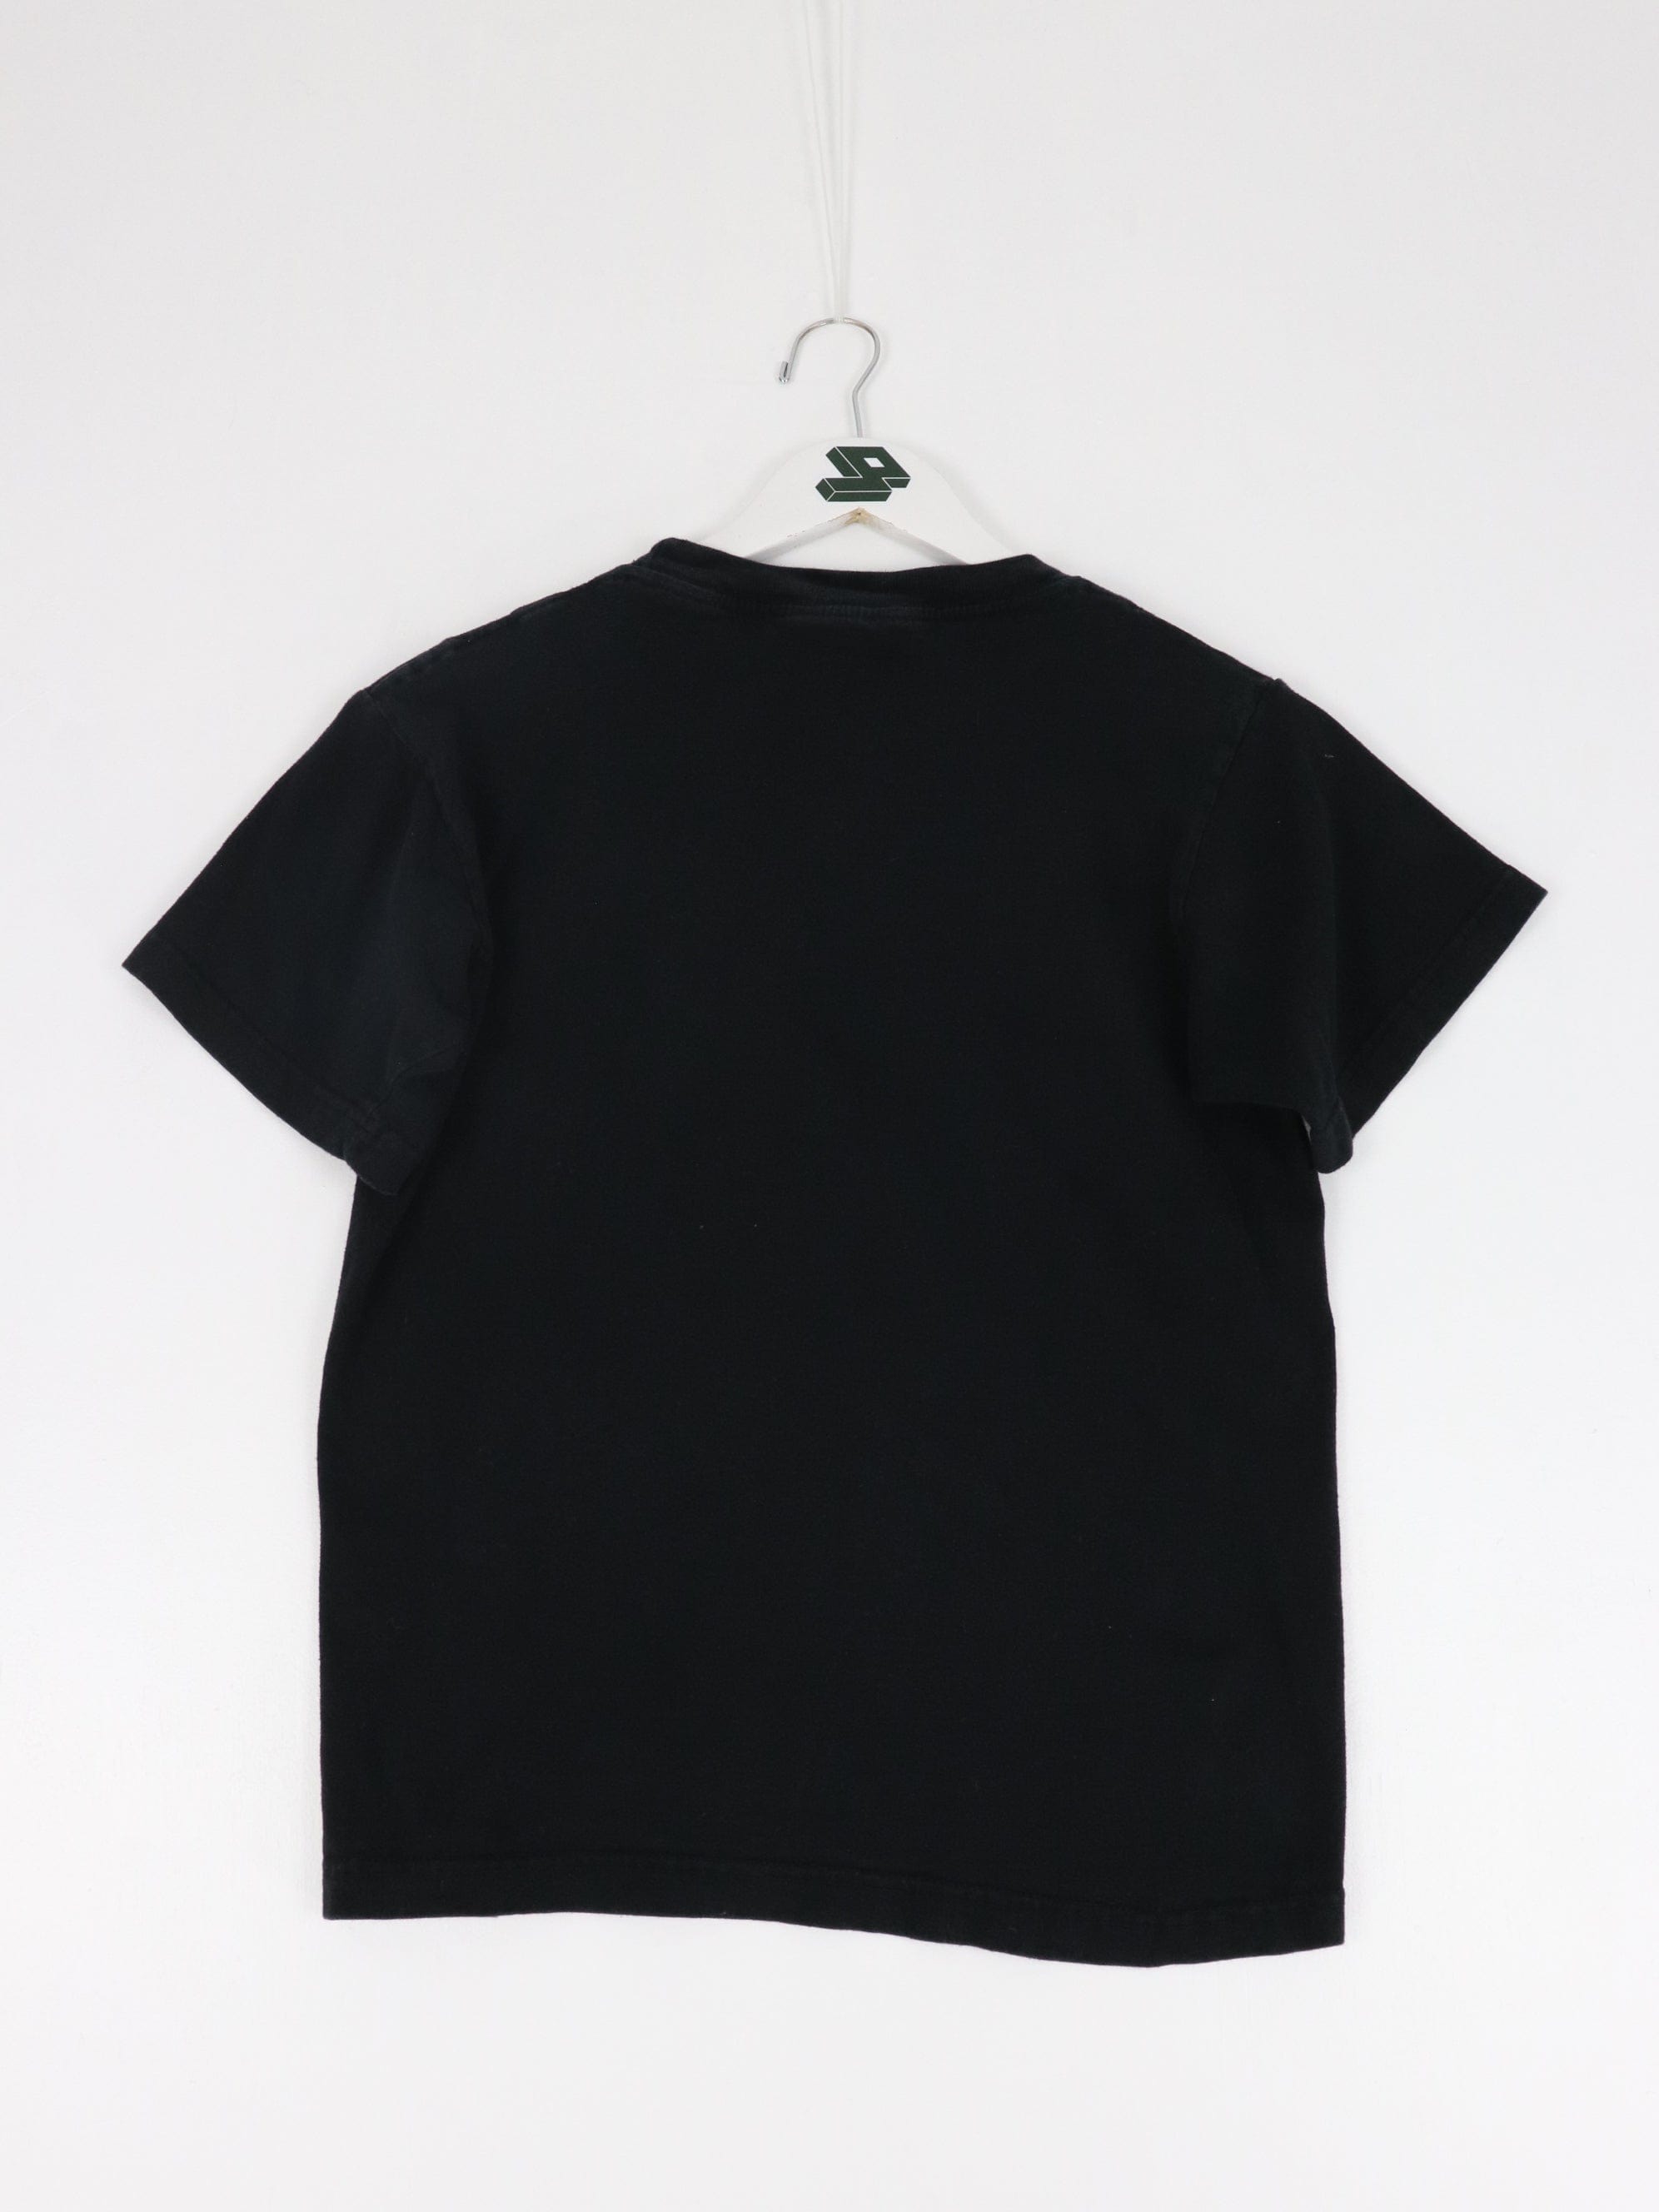 Oakley T Shirt Mens XL Black Camo Outdoors Long Sleeve